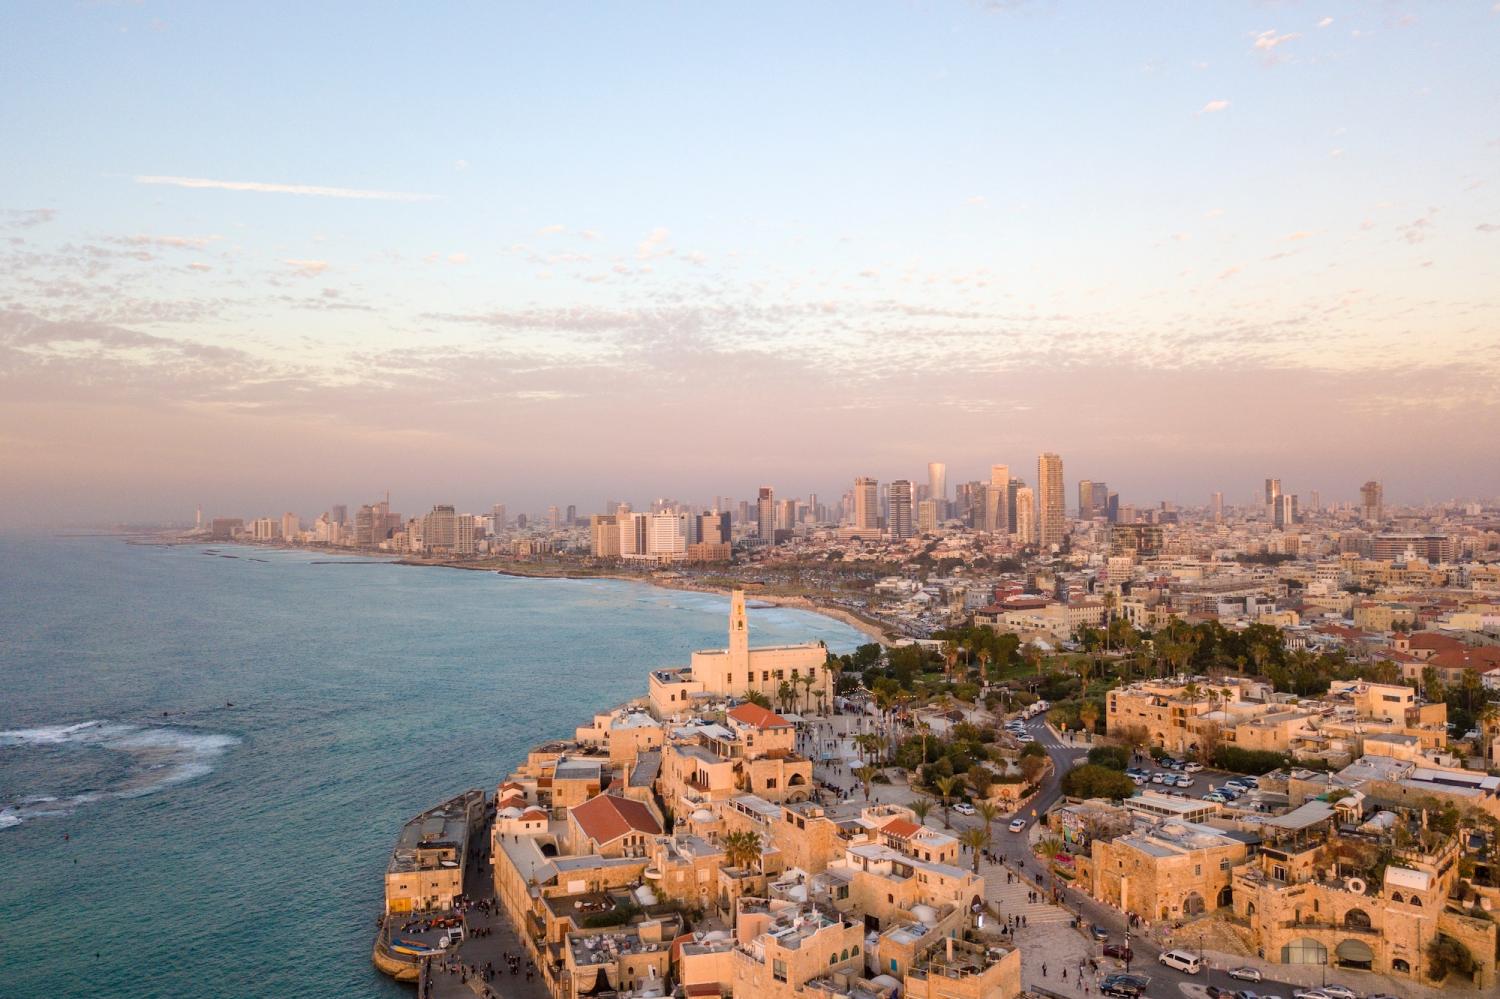 Tel Aviv, Israel - lessons on inclusive growth